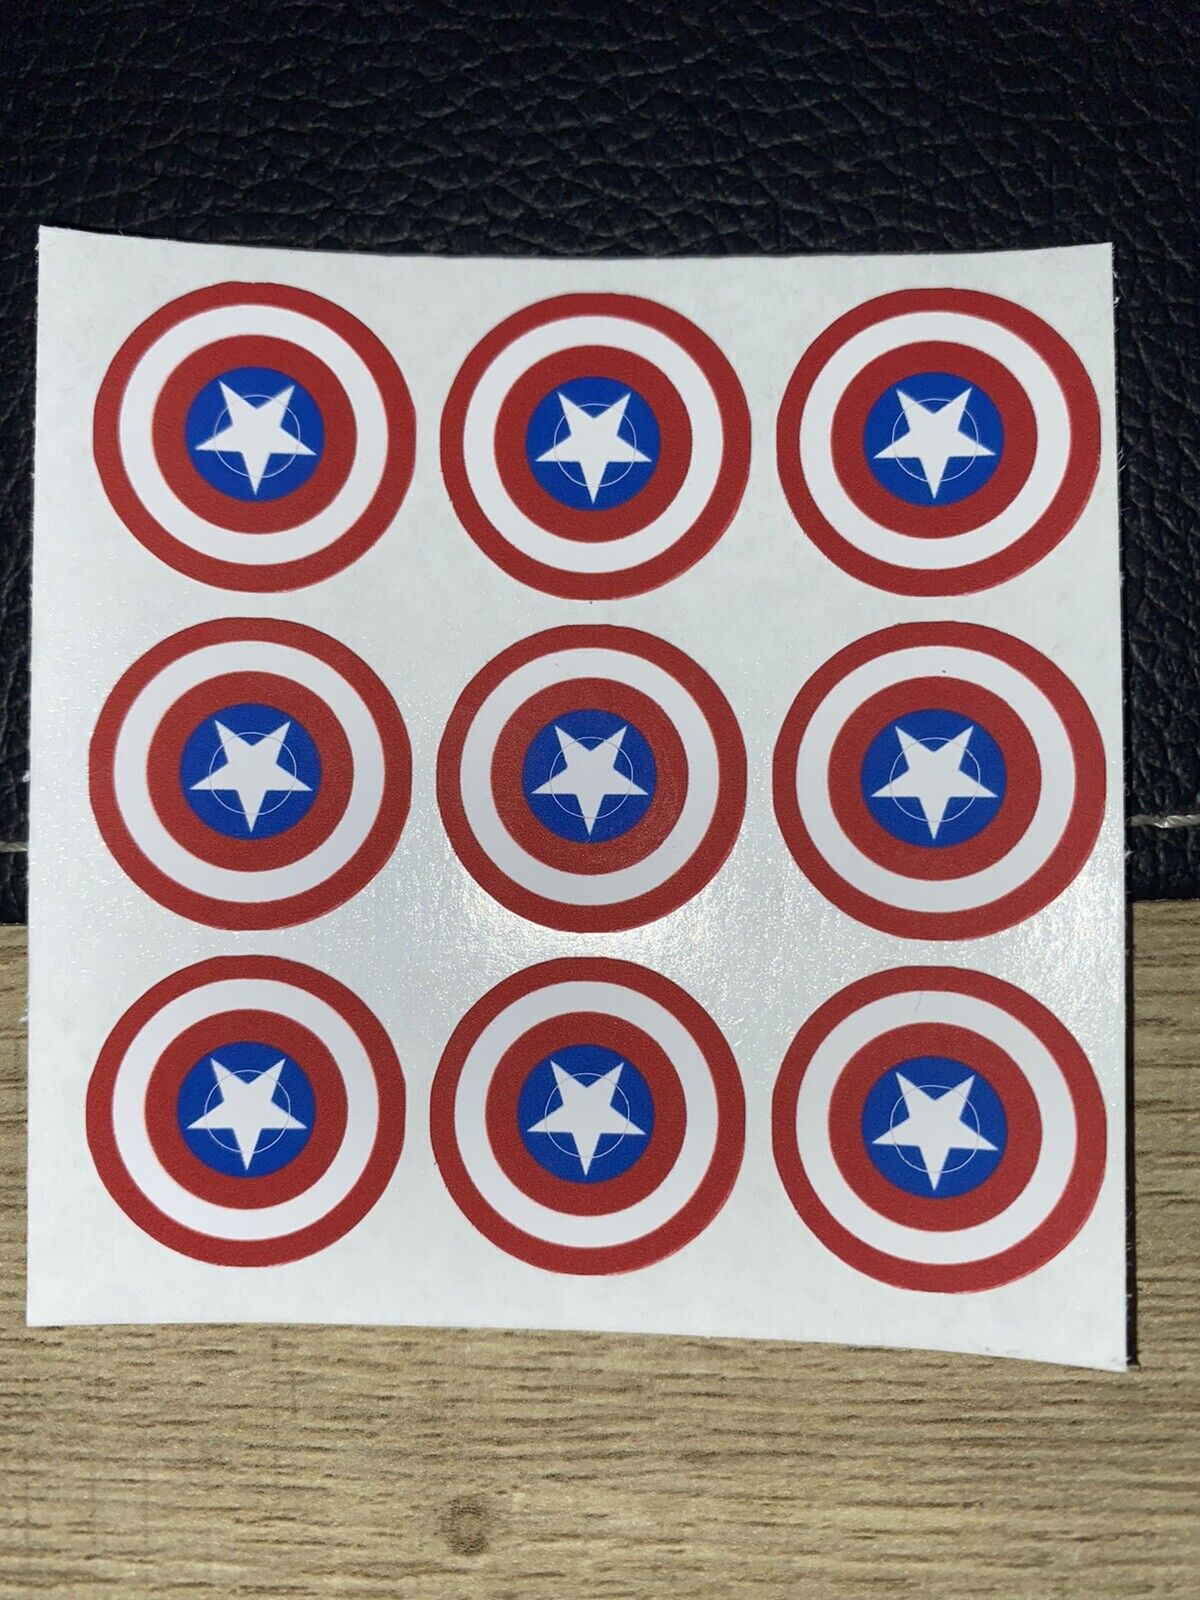 9 - Bally, Williams, Gottlieb Vinyl Pinball Target Stickers/Decals USA SHIELD